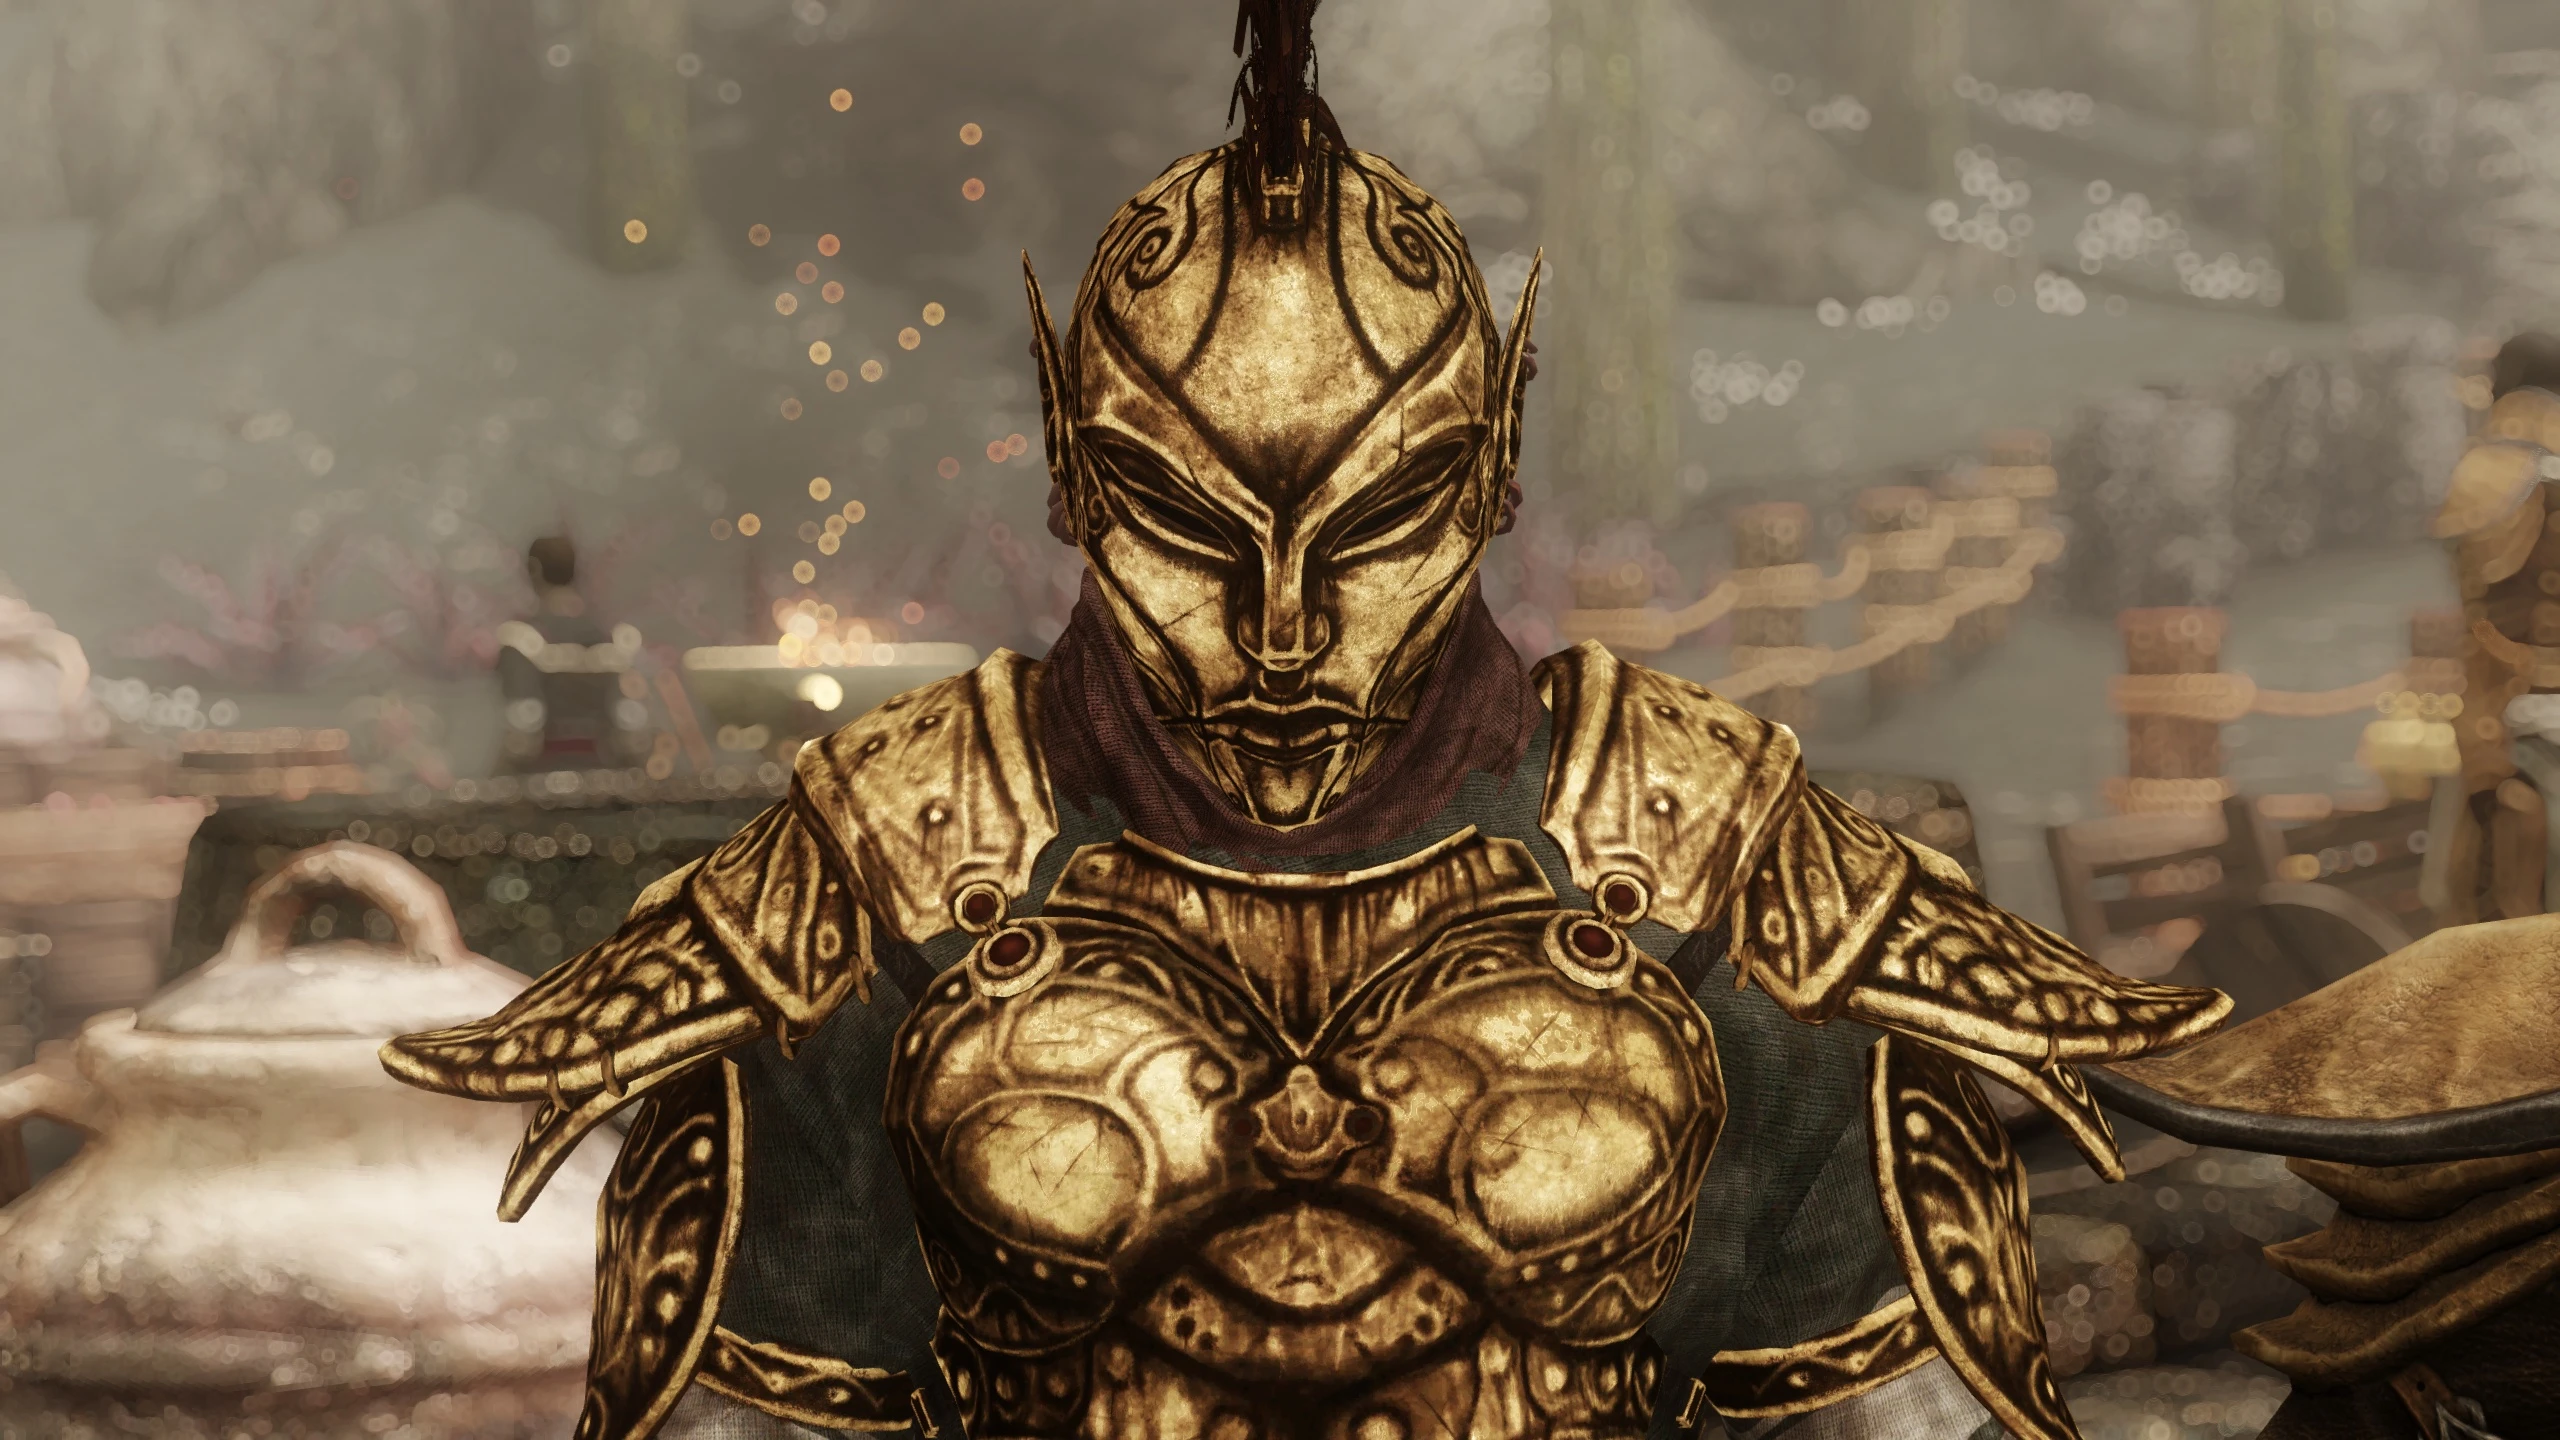 indoril ordinator armor at skyrim special edition nexus mods and community.